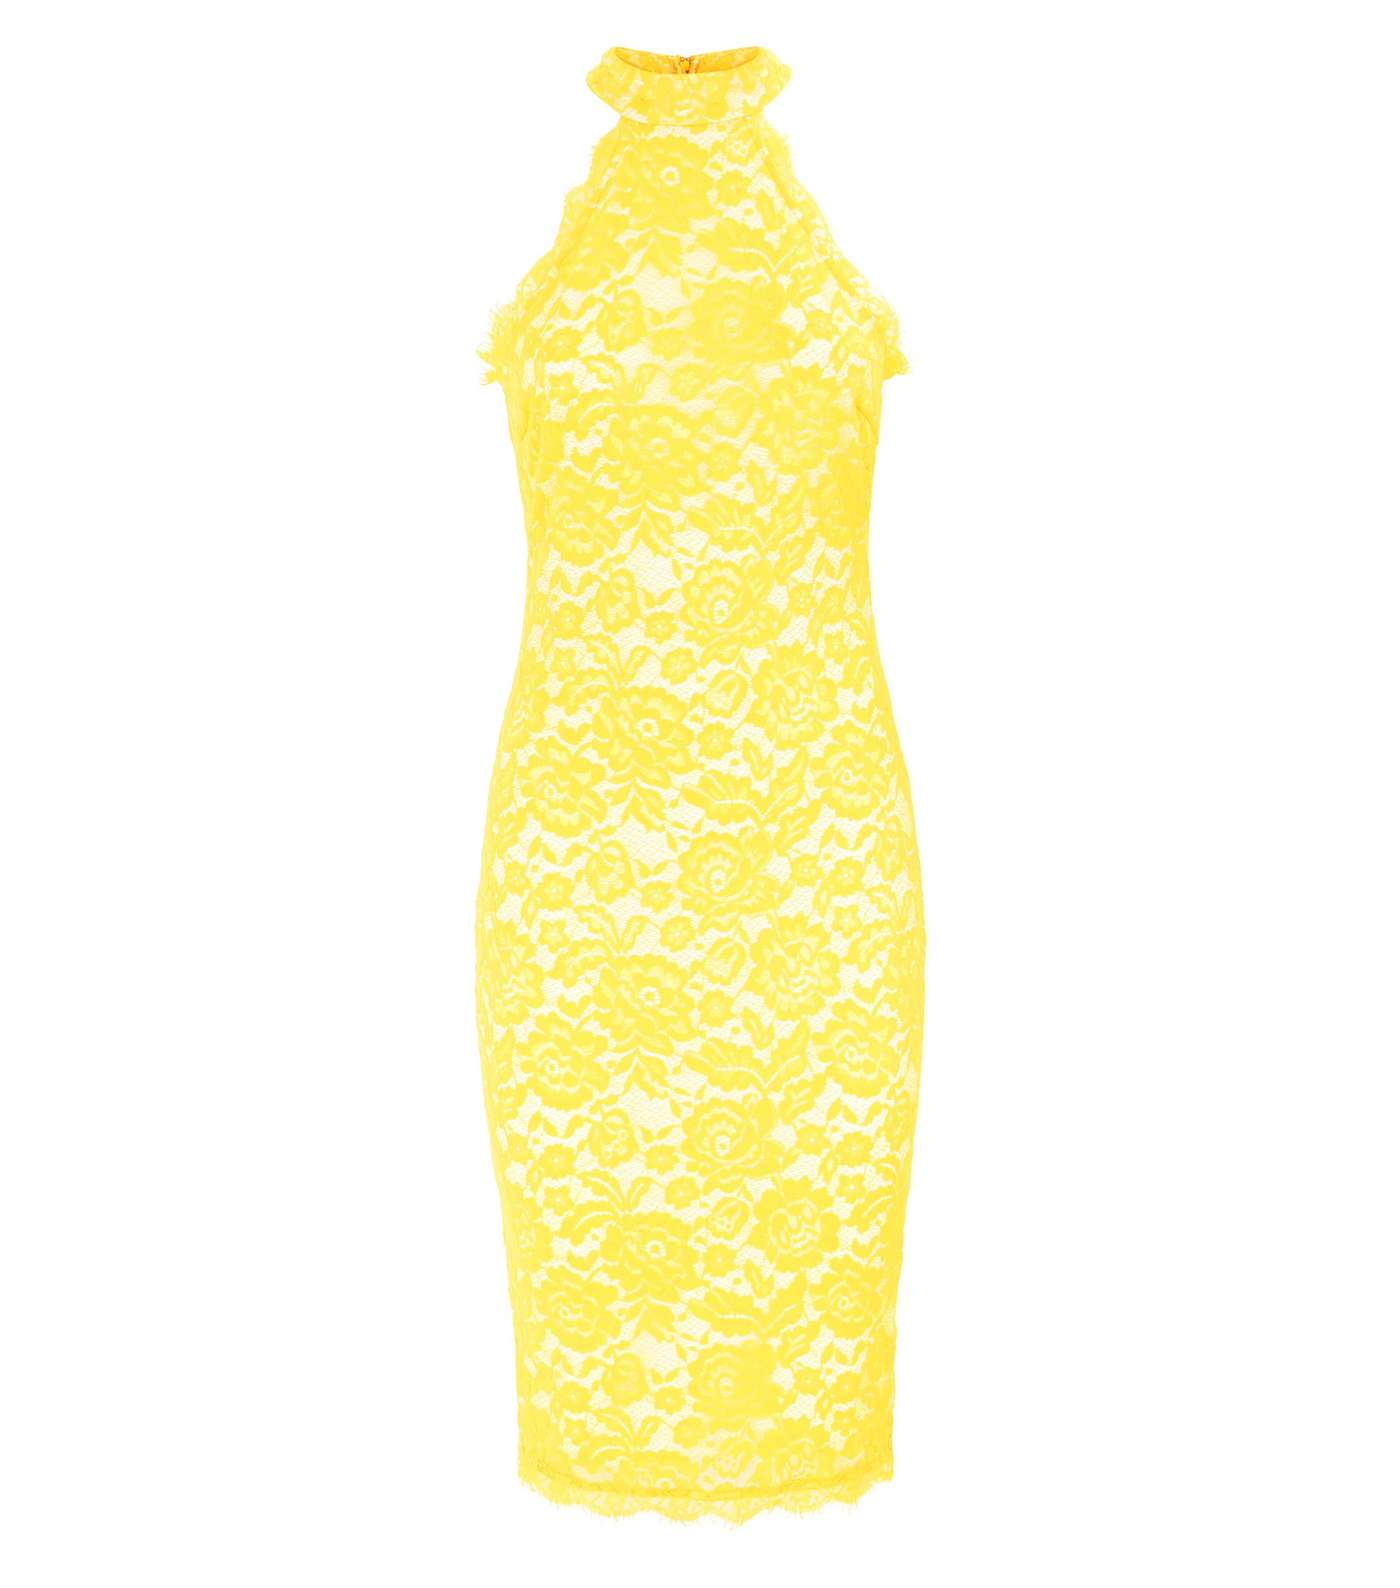 AX Paris Yellow Lace High Neck Dress Image 4